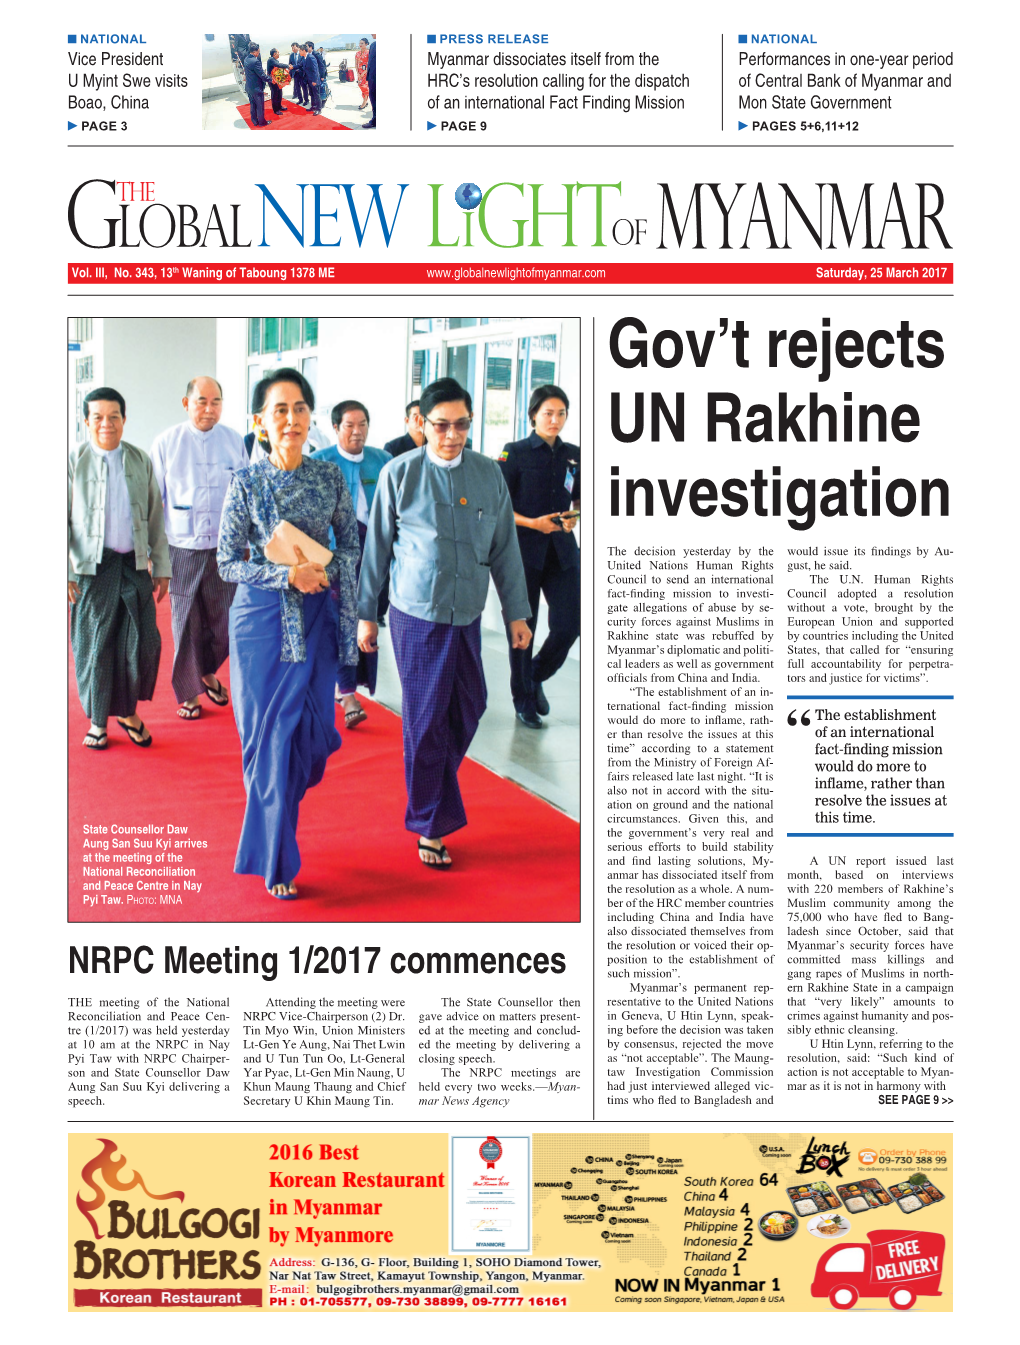 Gov't Rejects UN Rakhine Investigation